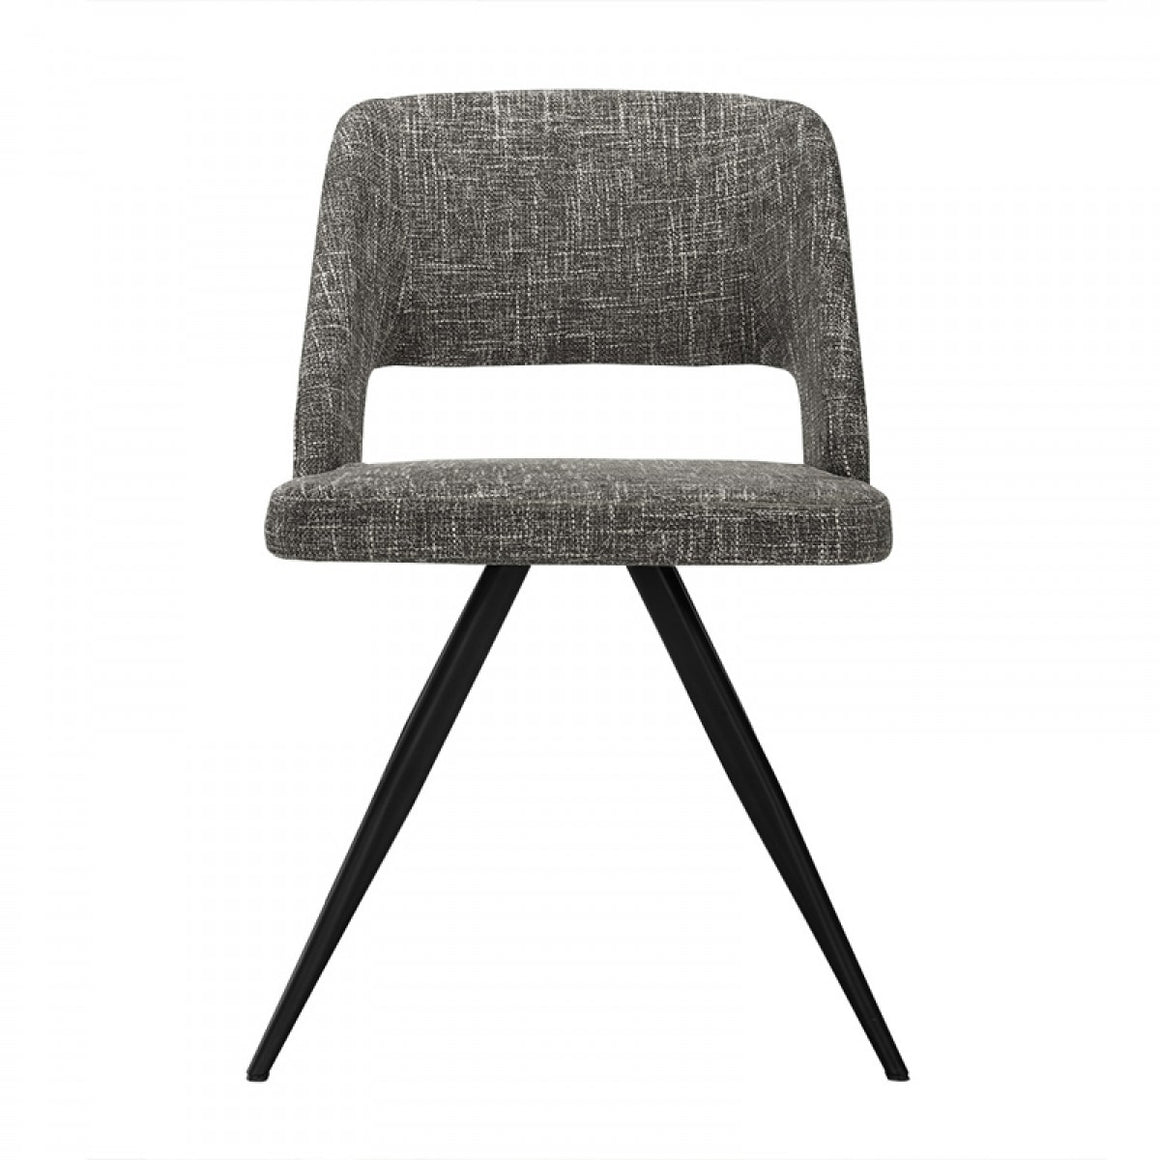 Palmer - Modern Grey Fabric Dining Chair (Set of 2)